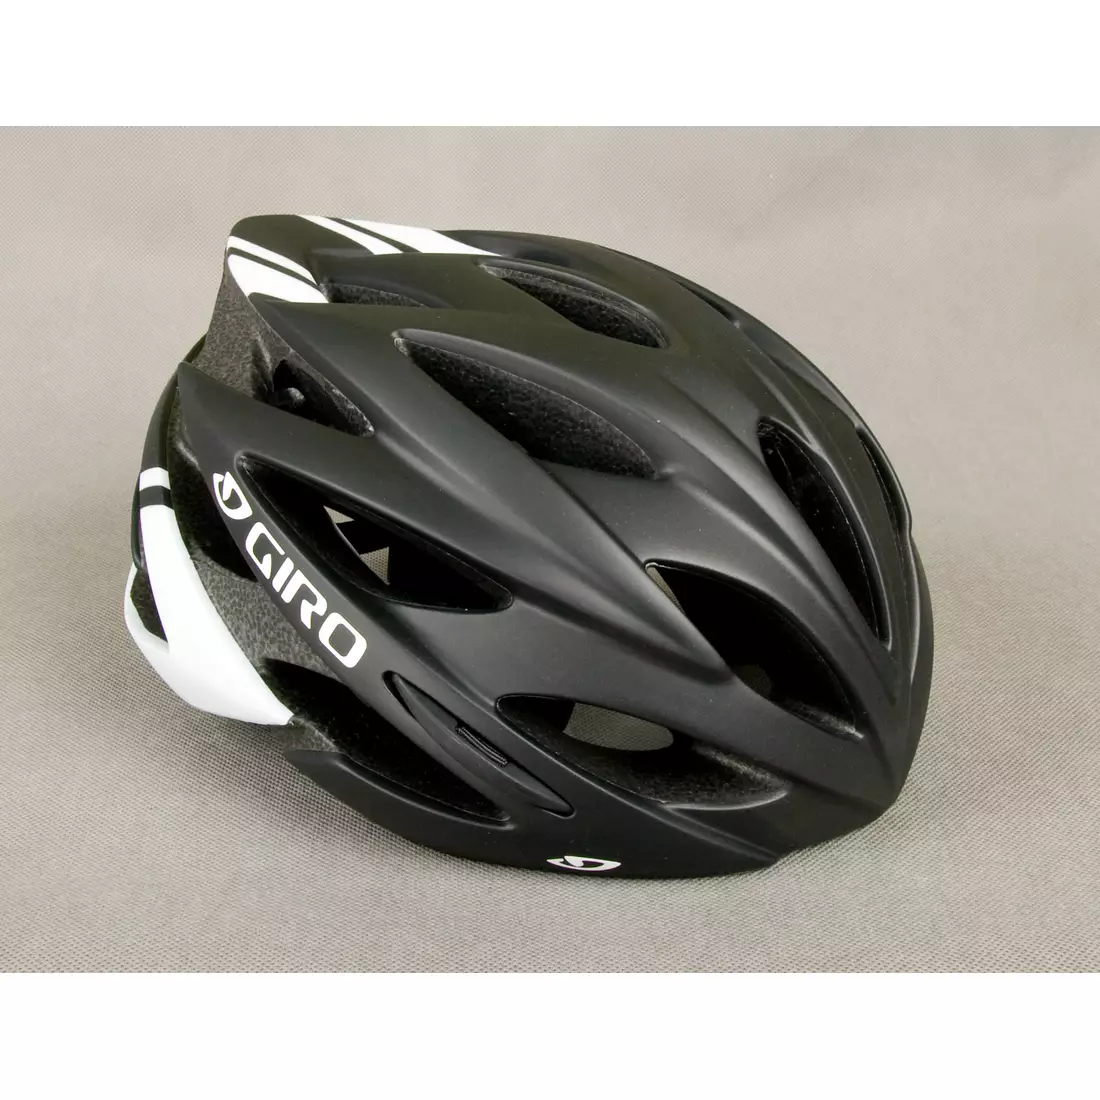 GIRO SAVANT - bicycle helmet, road, color: Black and white